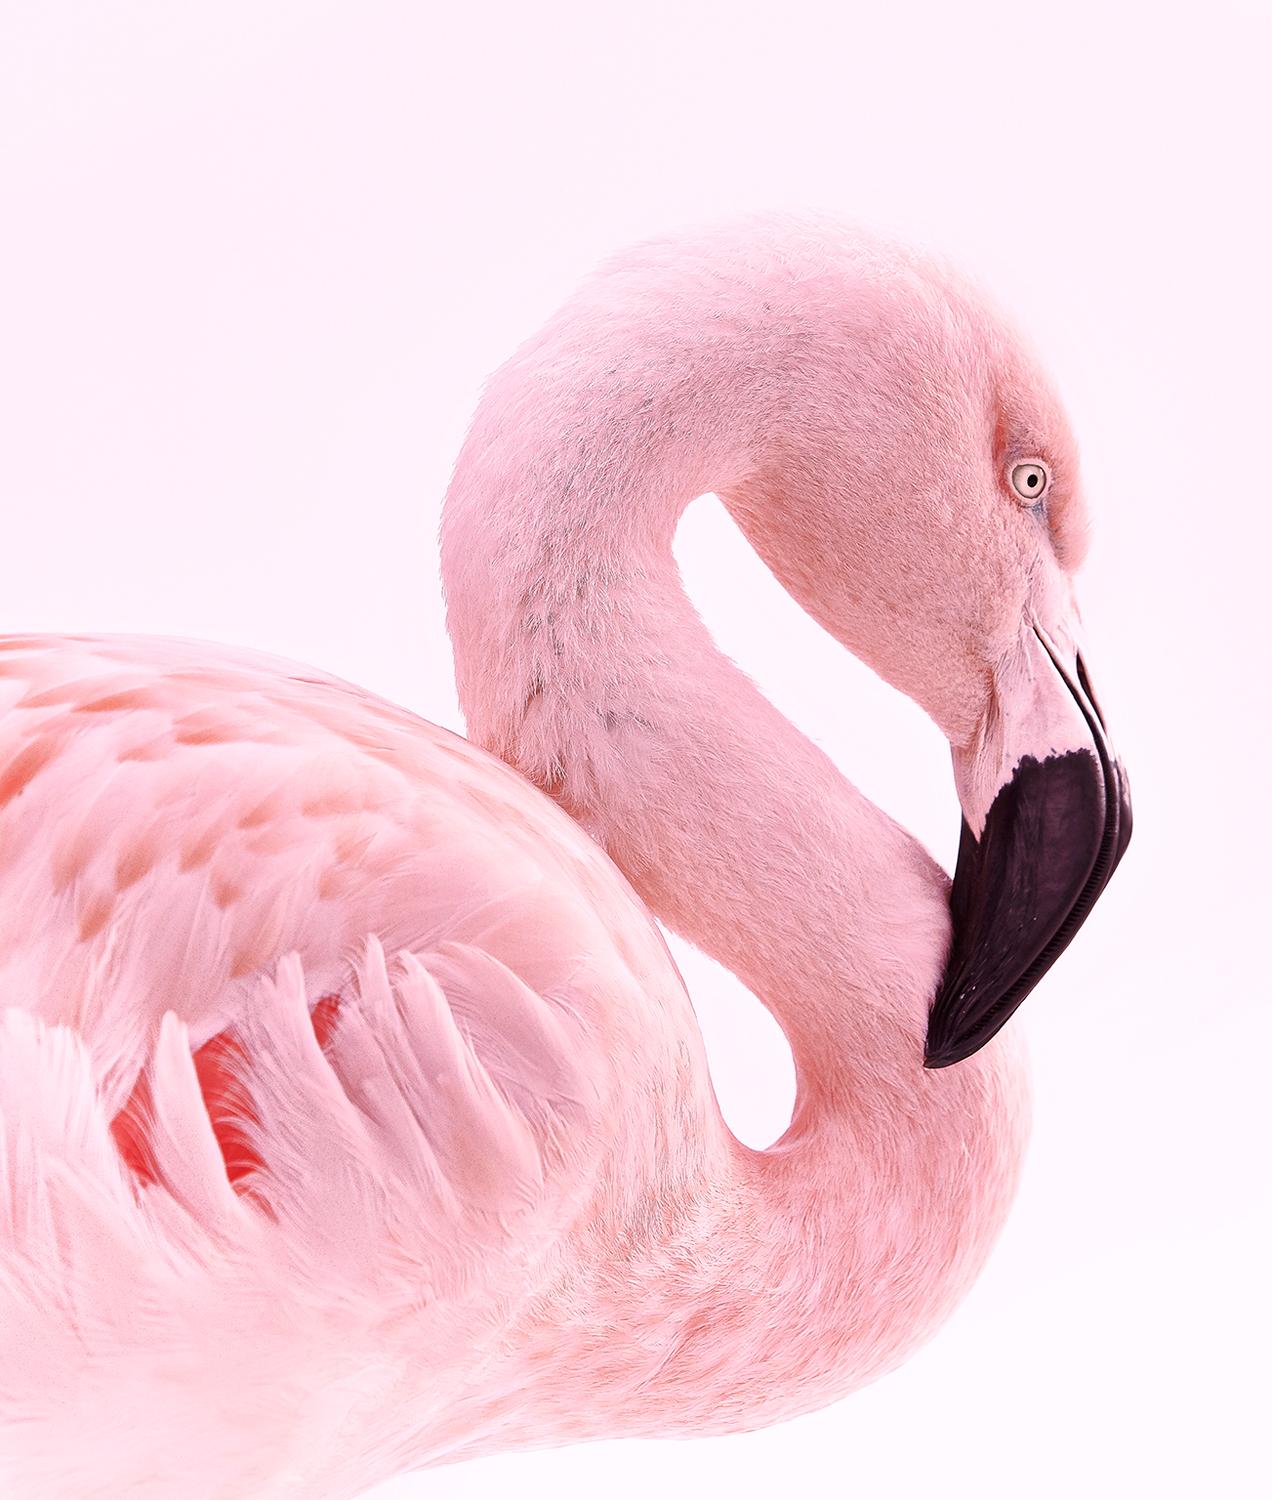 Flamingo No. 3 - Pink Color Photograph by Chris Gordaneer